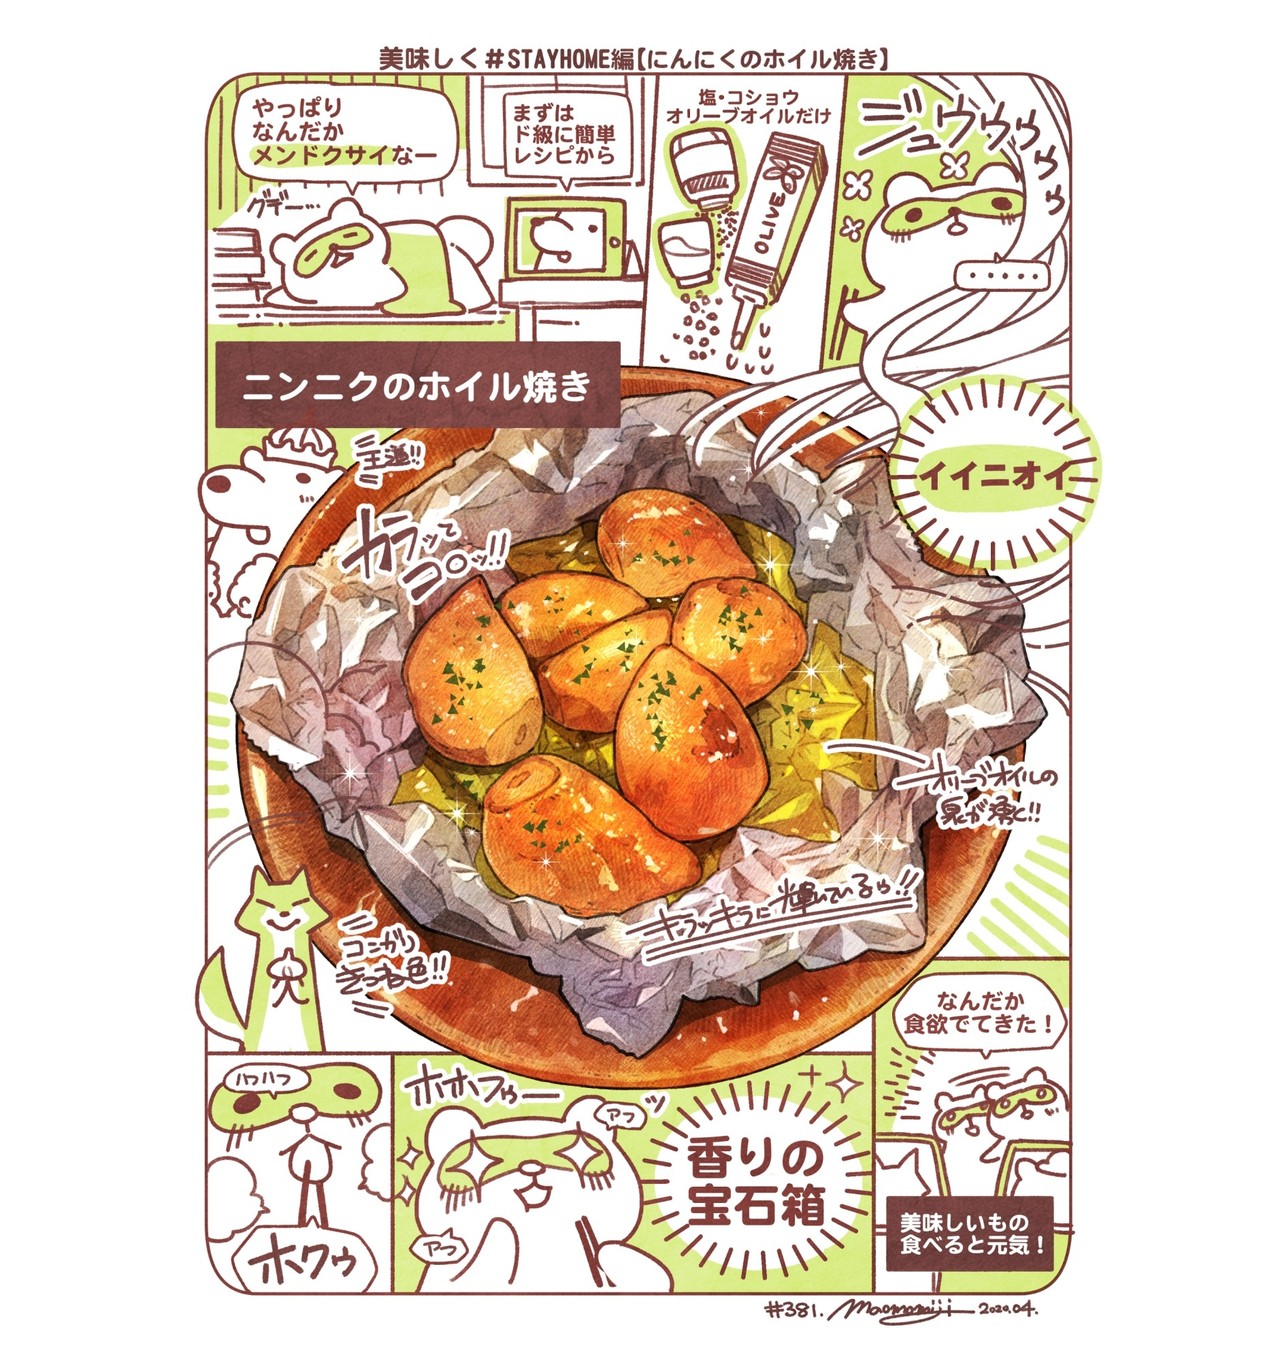 ３８１ Garlic Baked In Foil ニンニクホイル焼きレポ もみじ真魚 Maomomiji Note